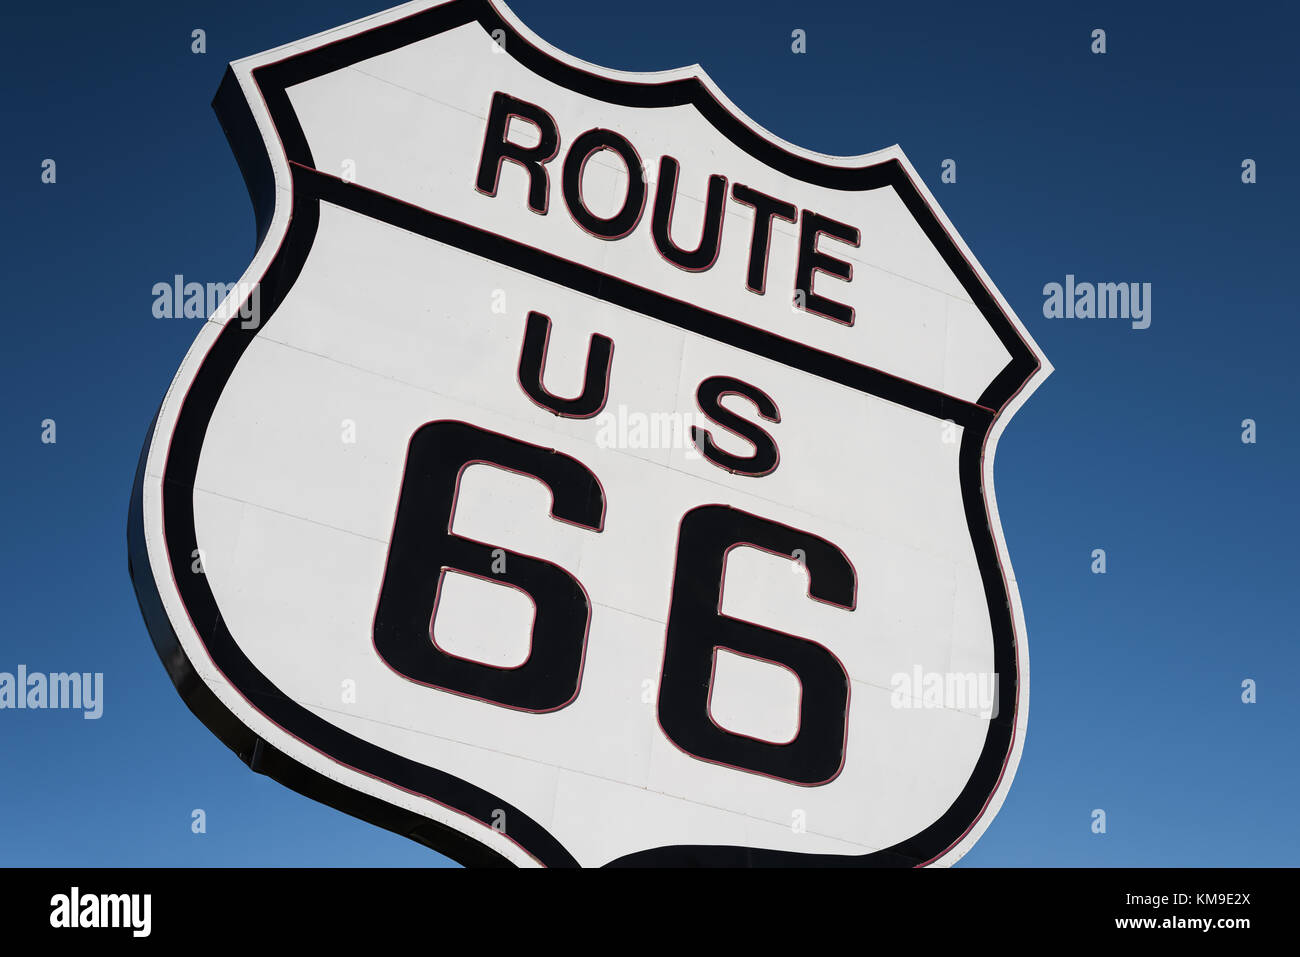 Route 66 sign against a blue sky, Oklahoma, USA Stock Photo